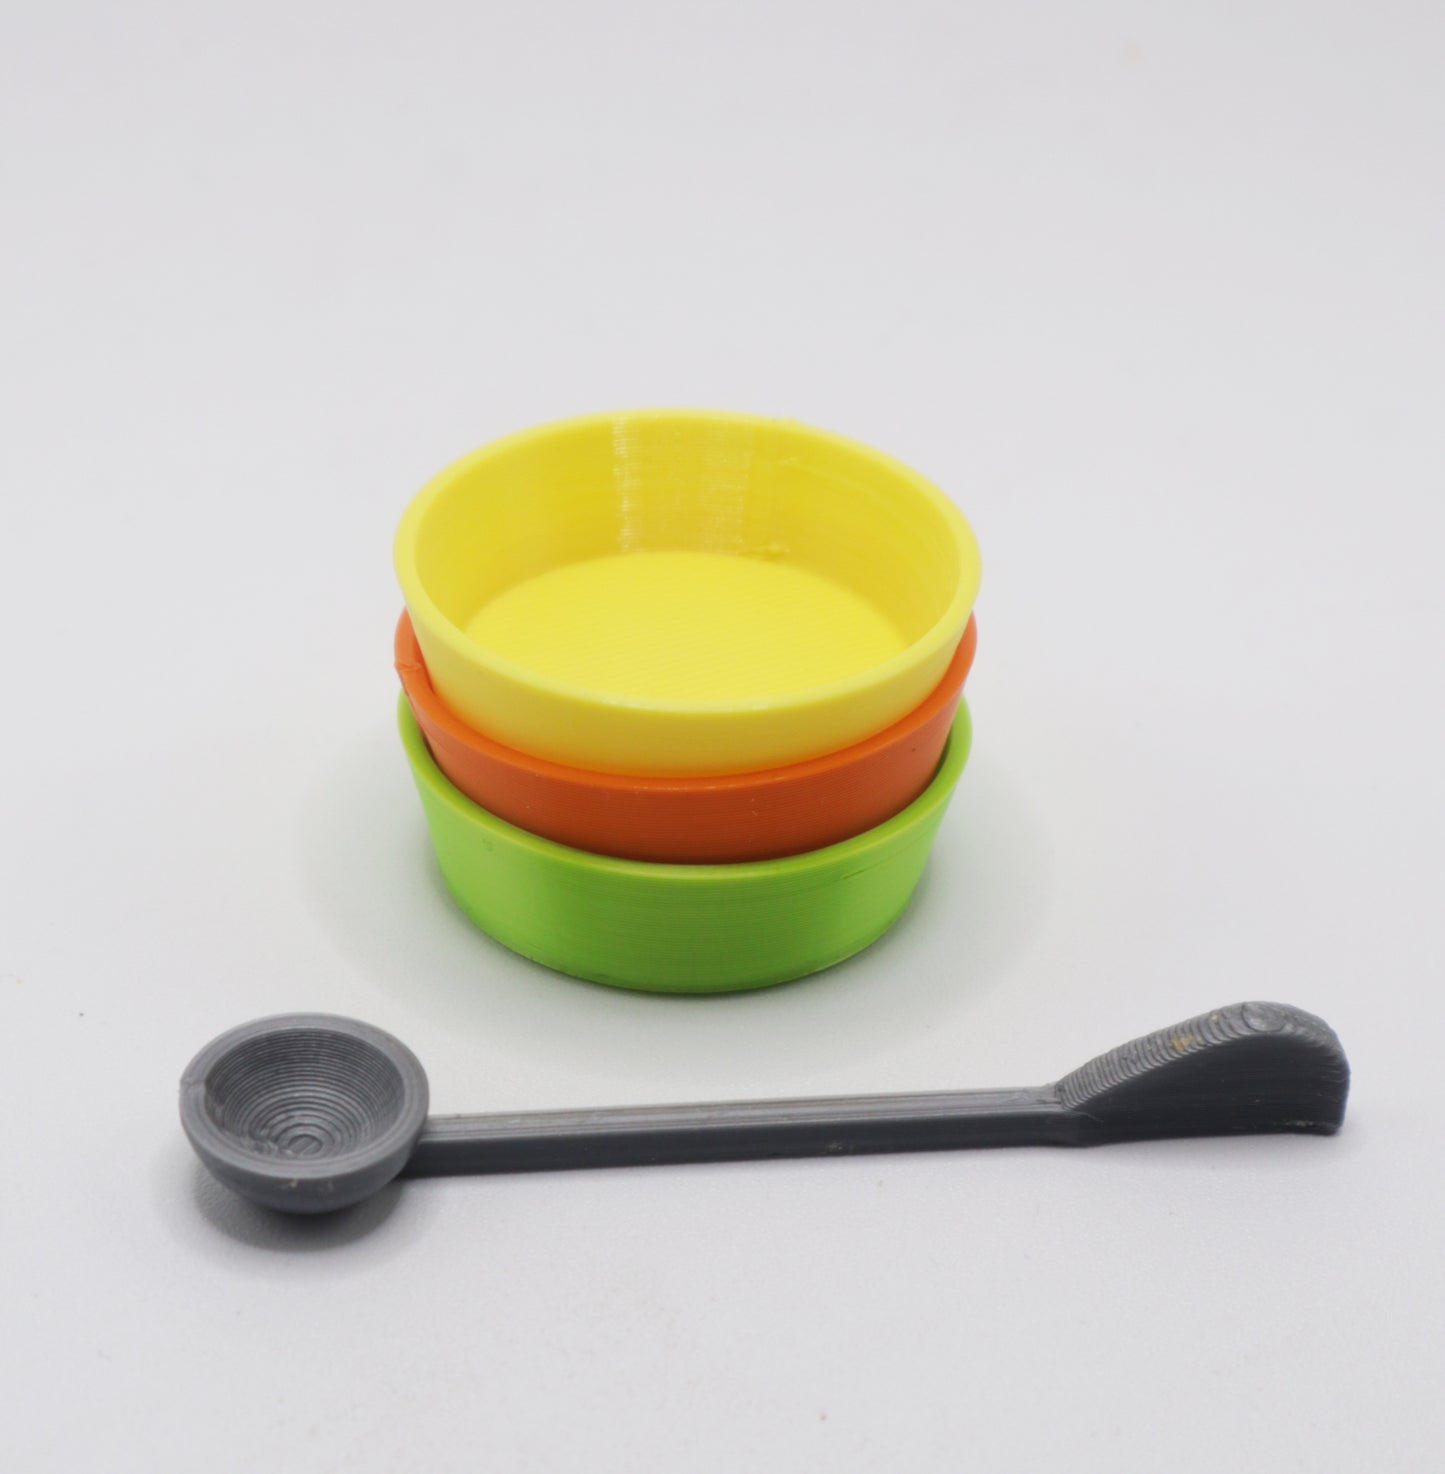 Food Bowls & Spoon Kit